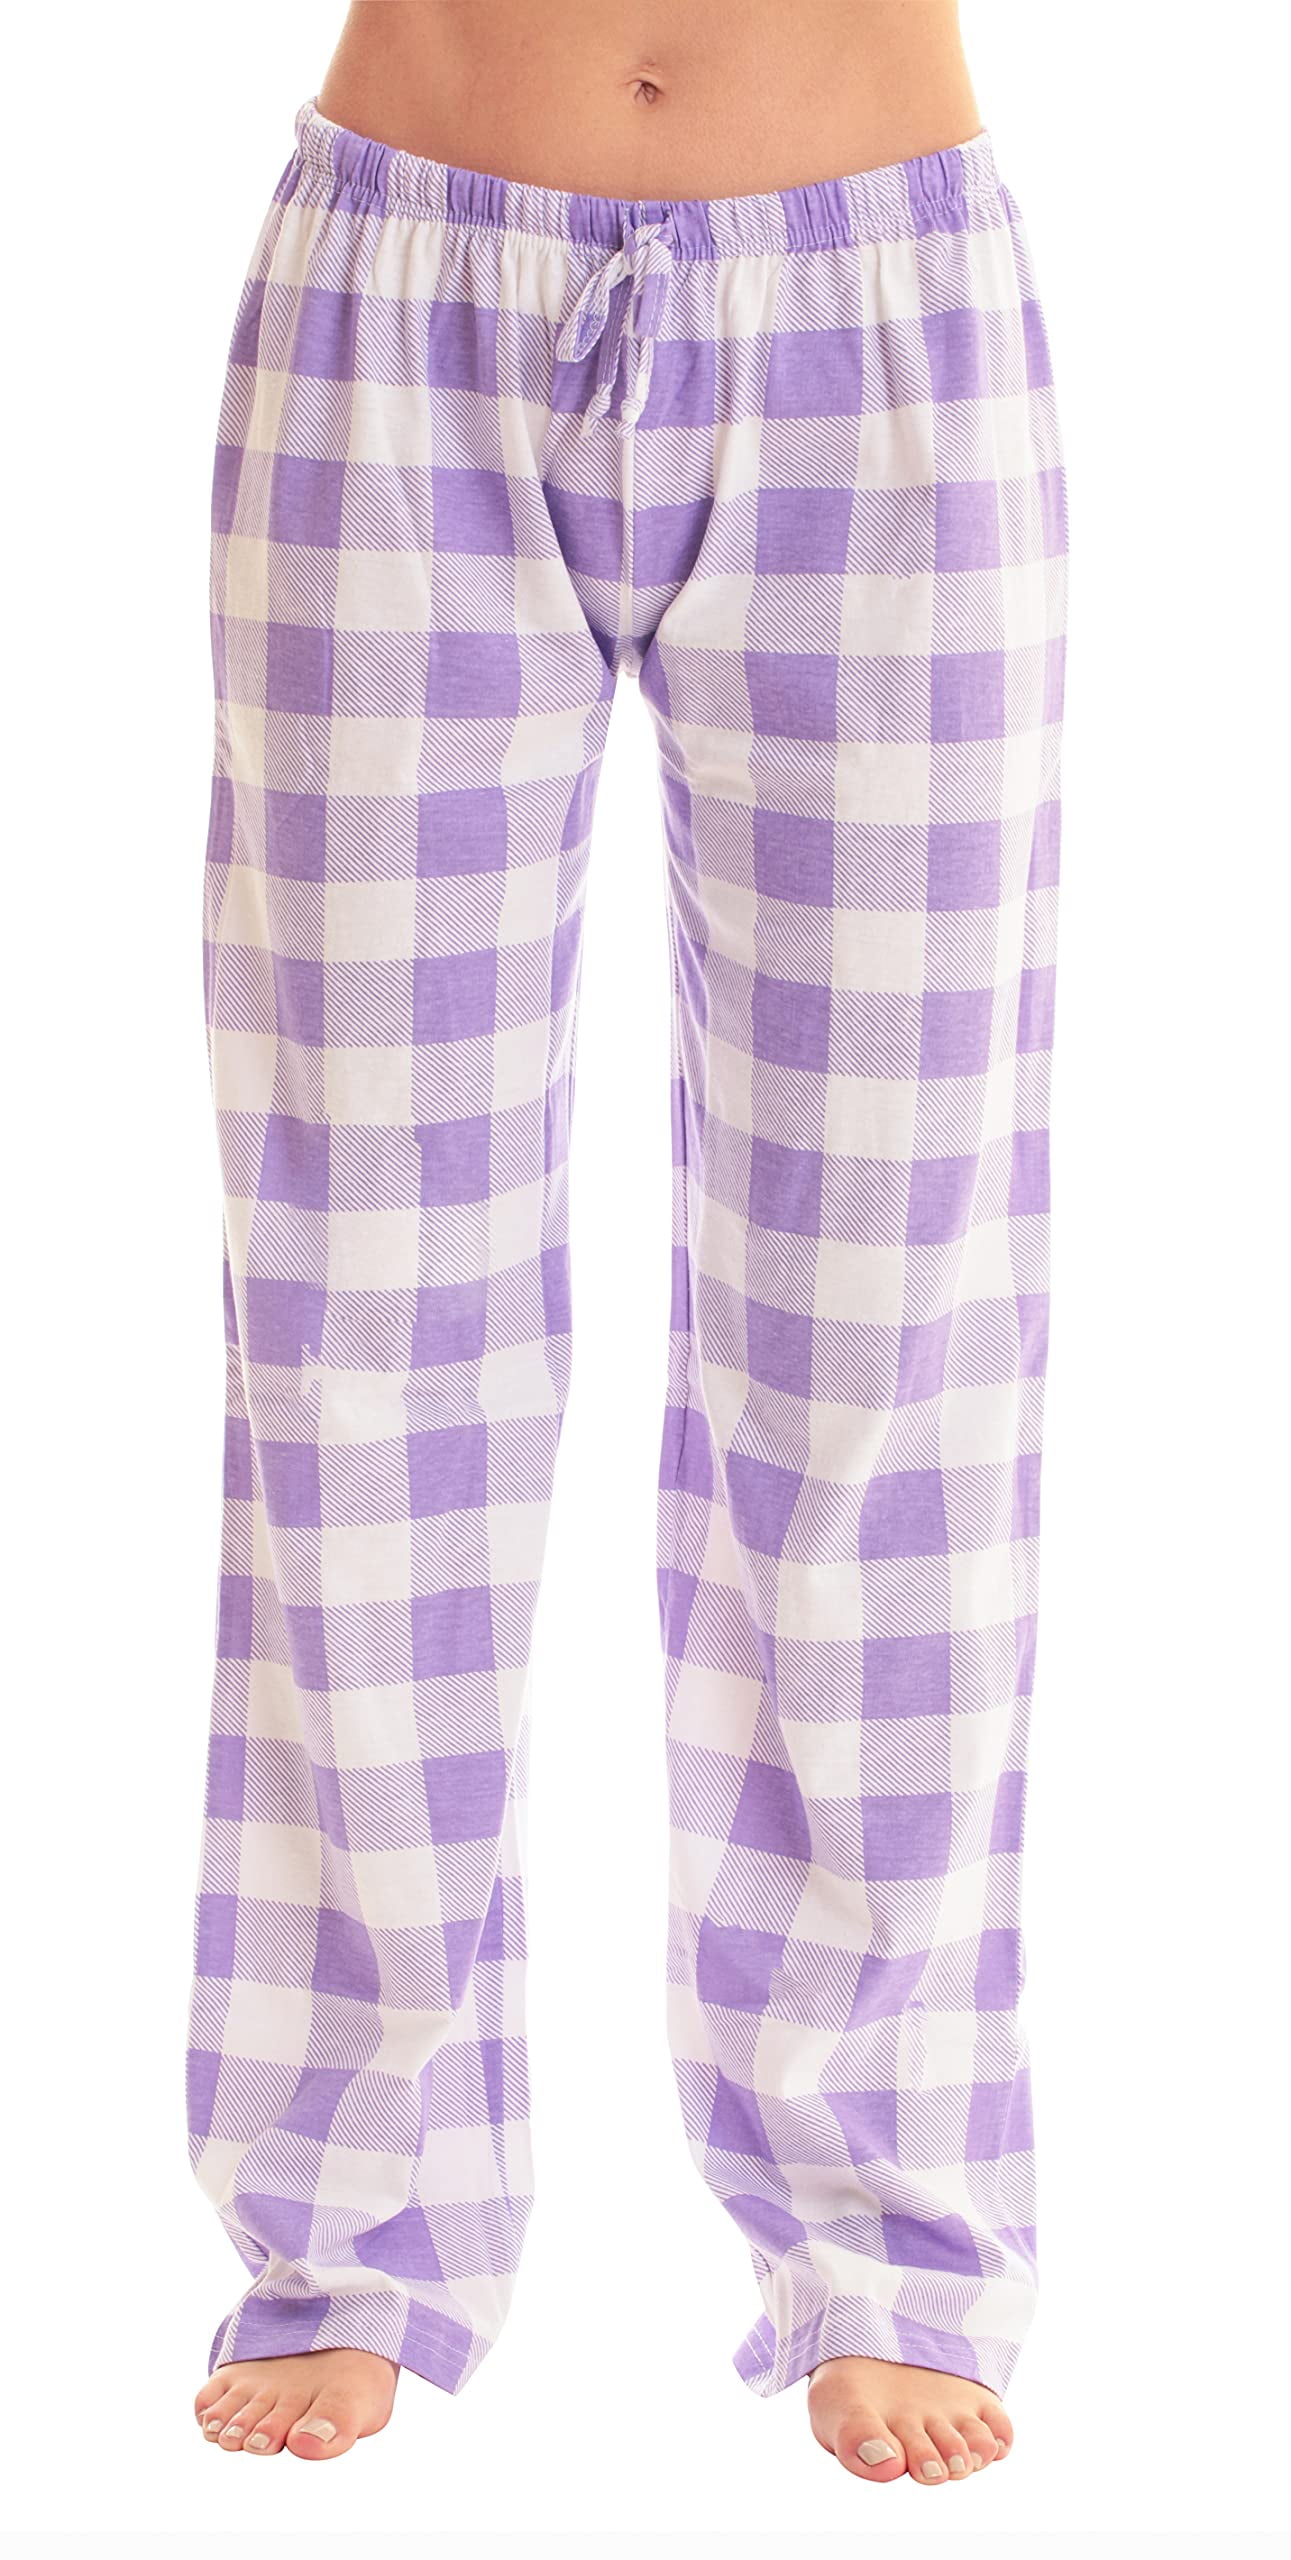 Toamir Women Buffalo Plaid Pajama Pants Sleepwear (Royal Black Buffalo Plaid,  3X) 